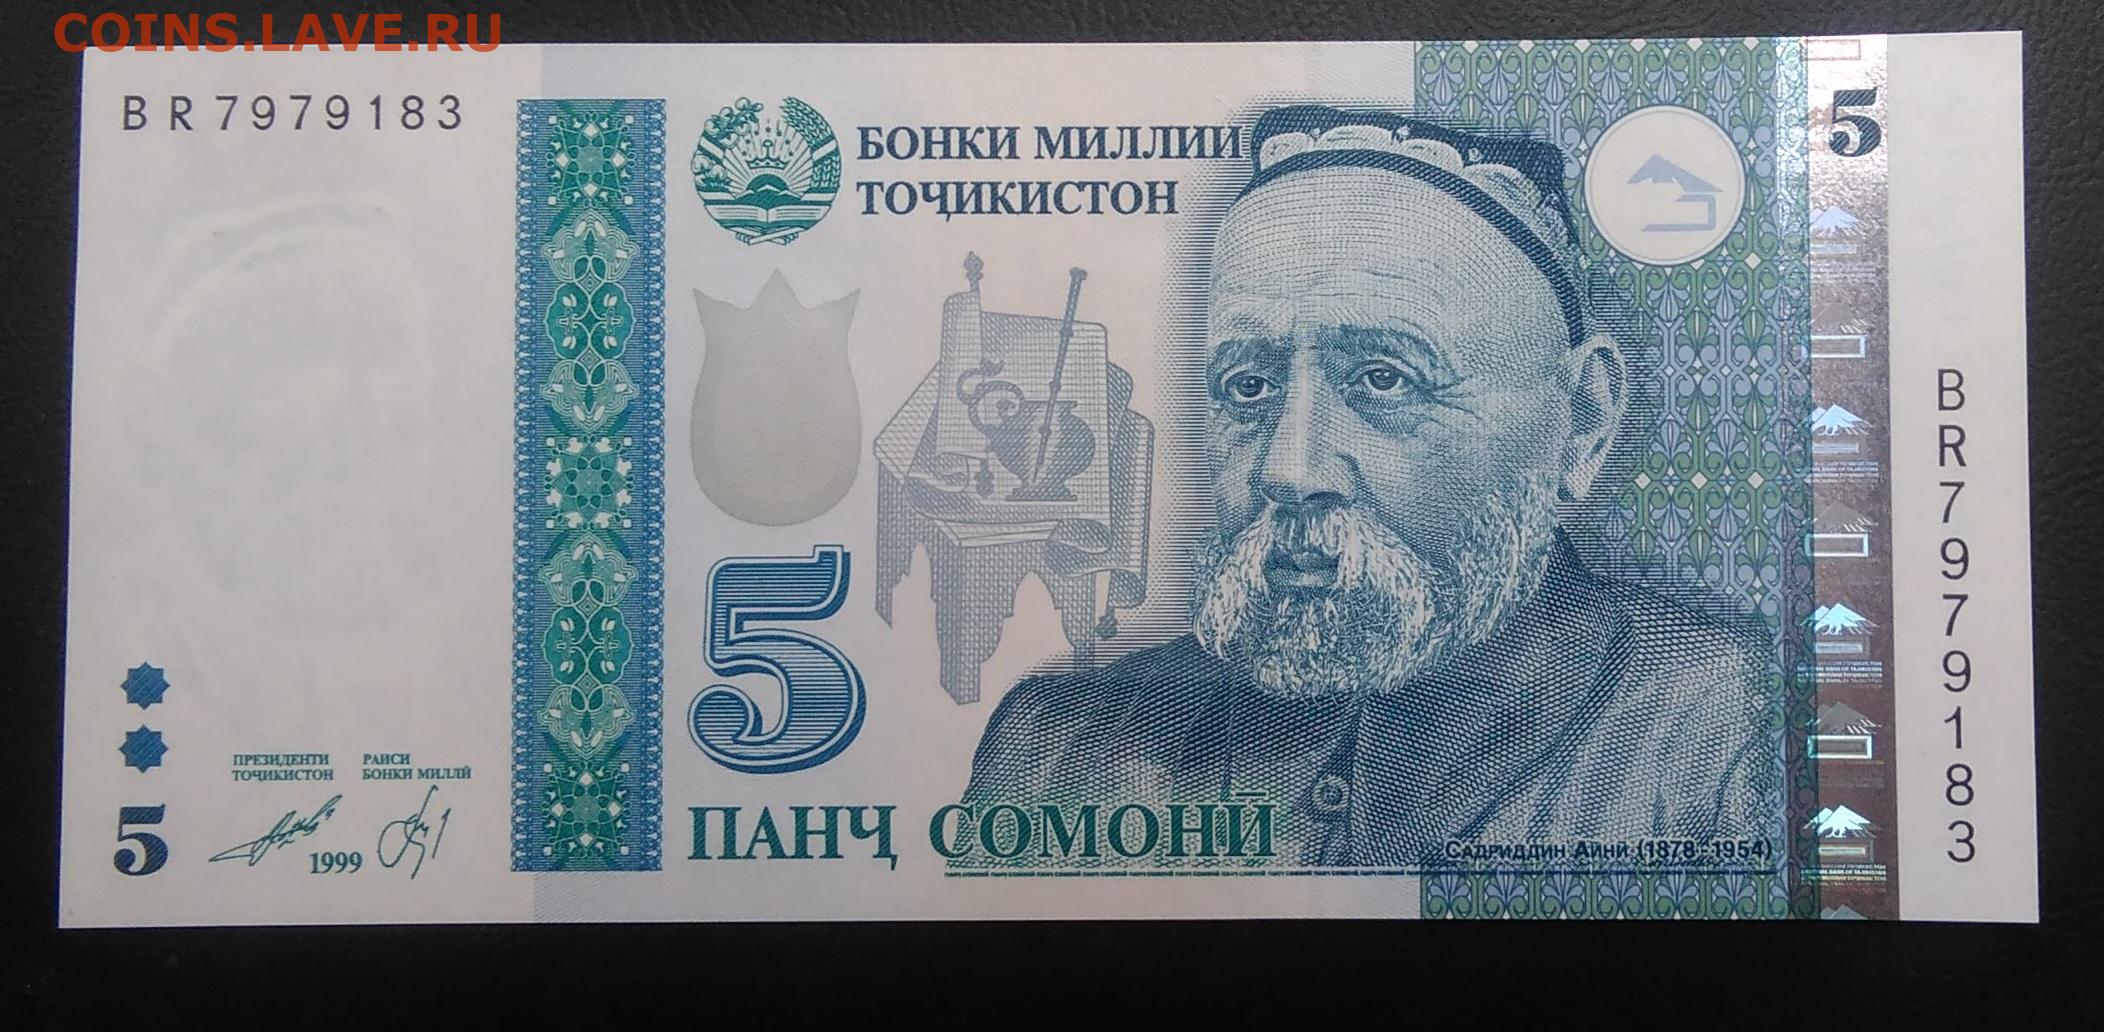 Таджикский сомони на рубли сколько будет. Банкноты Таджикистана: 5 Сомони. Купюры Таджикистана 1000 Сомони. Банкнота 10 Сомони 1999 год Таджикистан. Купюра Таджикистана 500 Сомони.